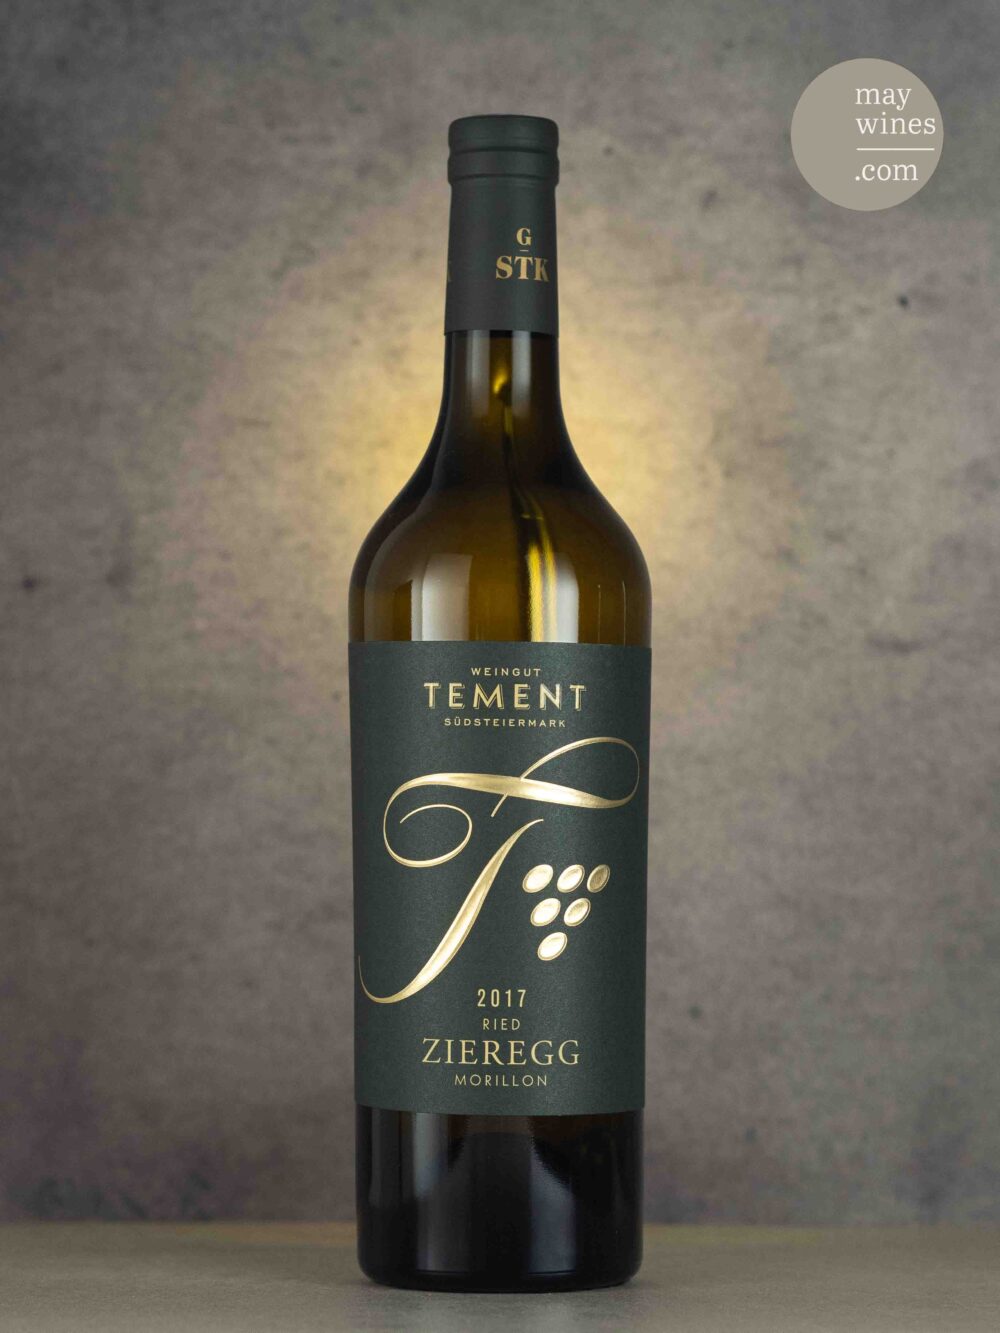 May Wines – Weißwein – 2017 Zieregg Morillon - Weingut Tement